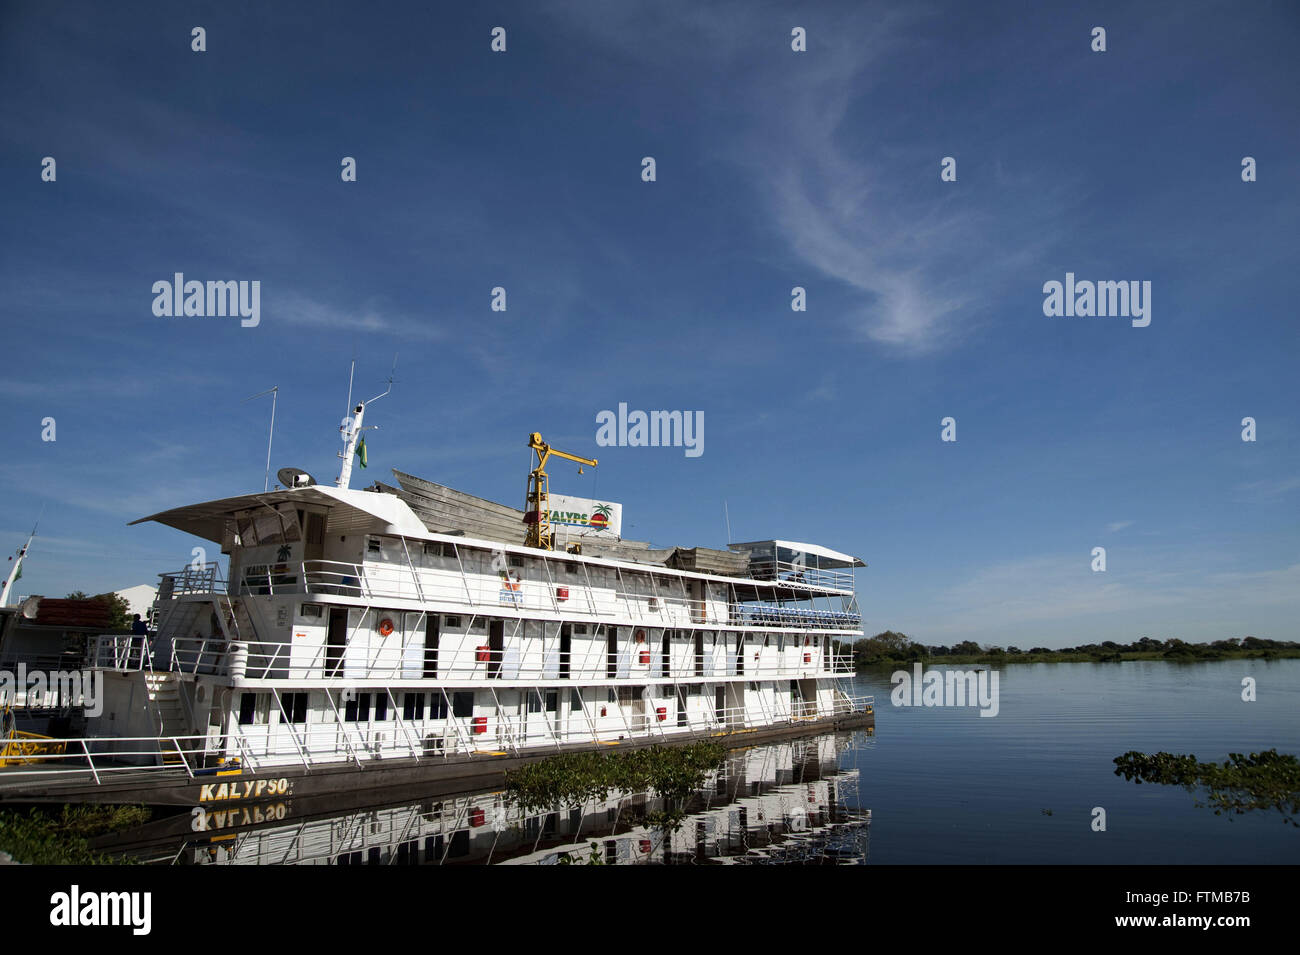 Hotel boat docked in the port city of Corumba Stock Photo